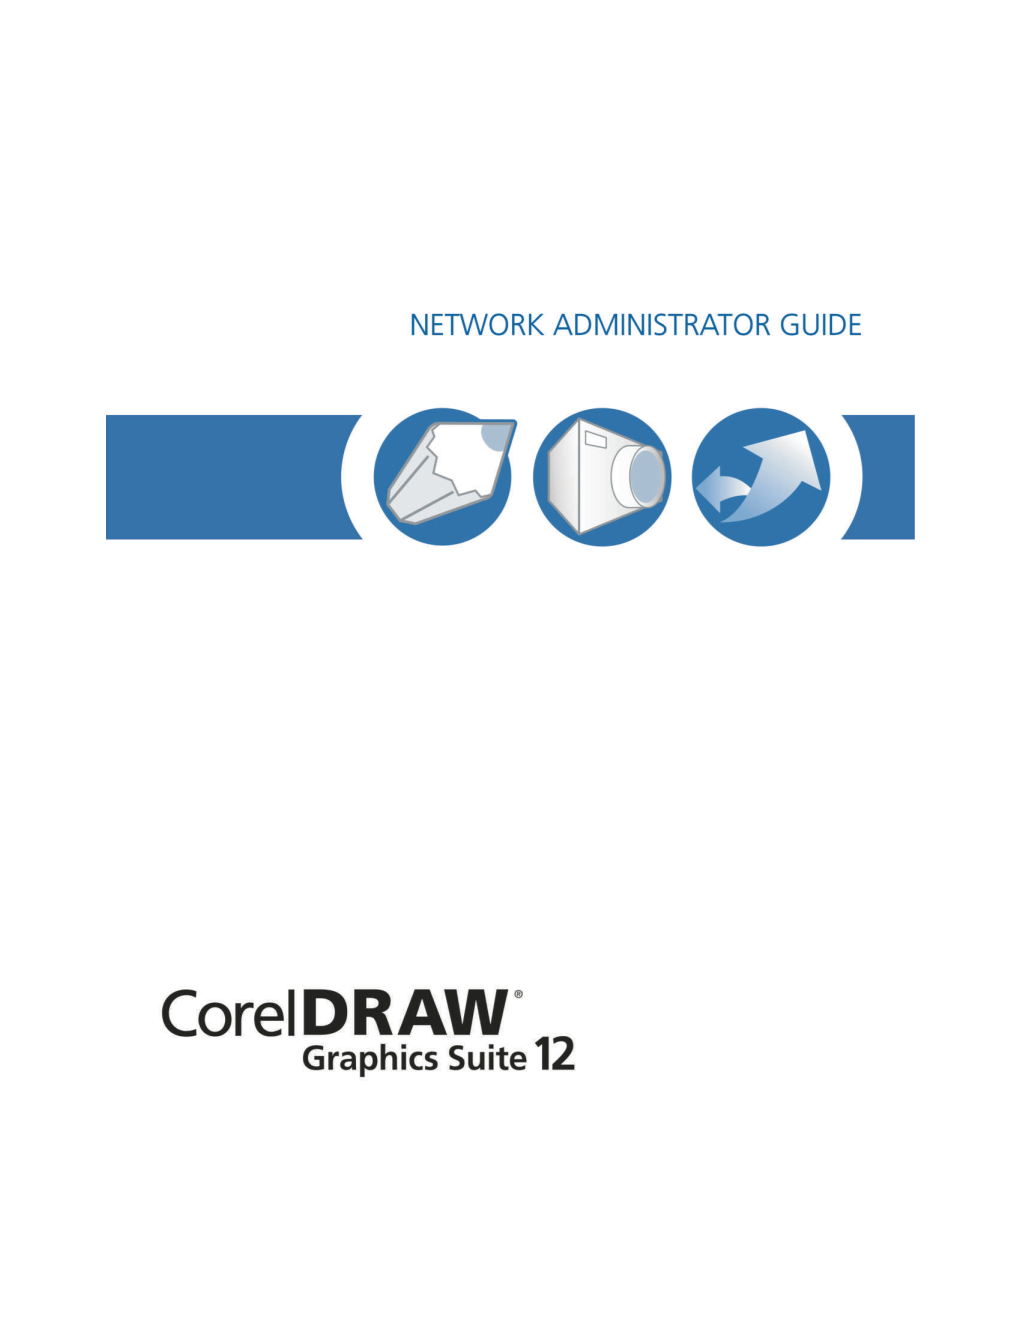 Coreldraw Graphics Suite 12 Network Administrator Guide